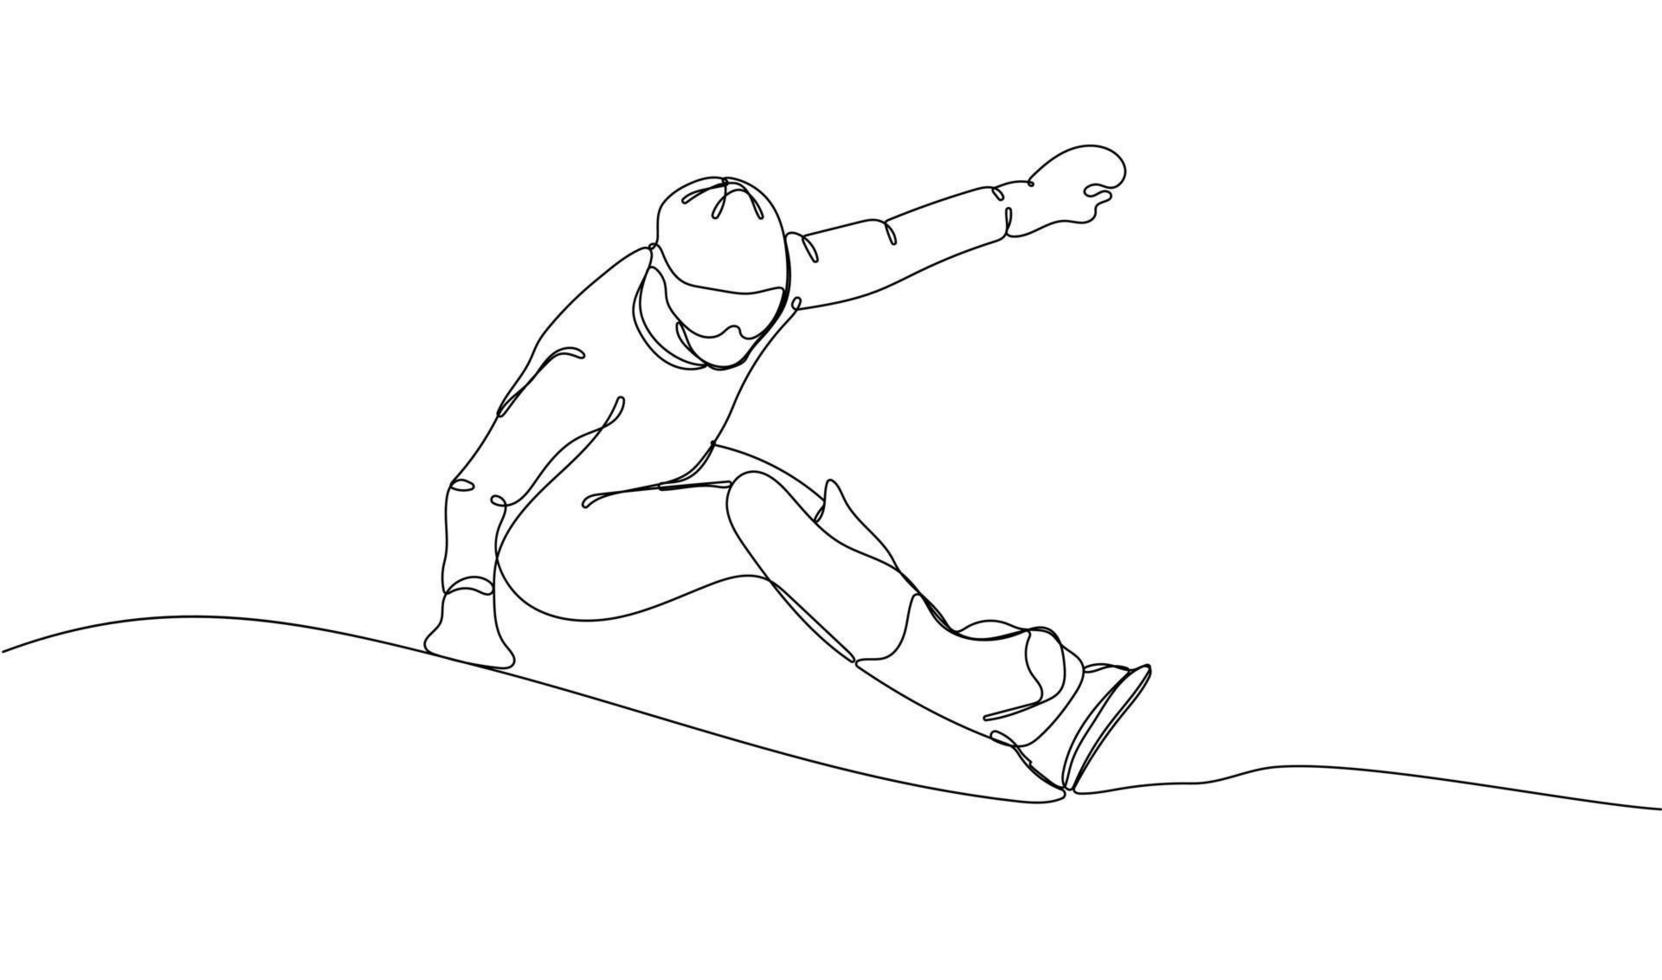 continu un ligne dessin de snowboard athlète1 vecteur